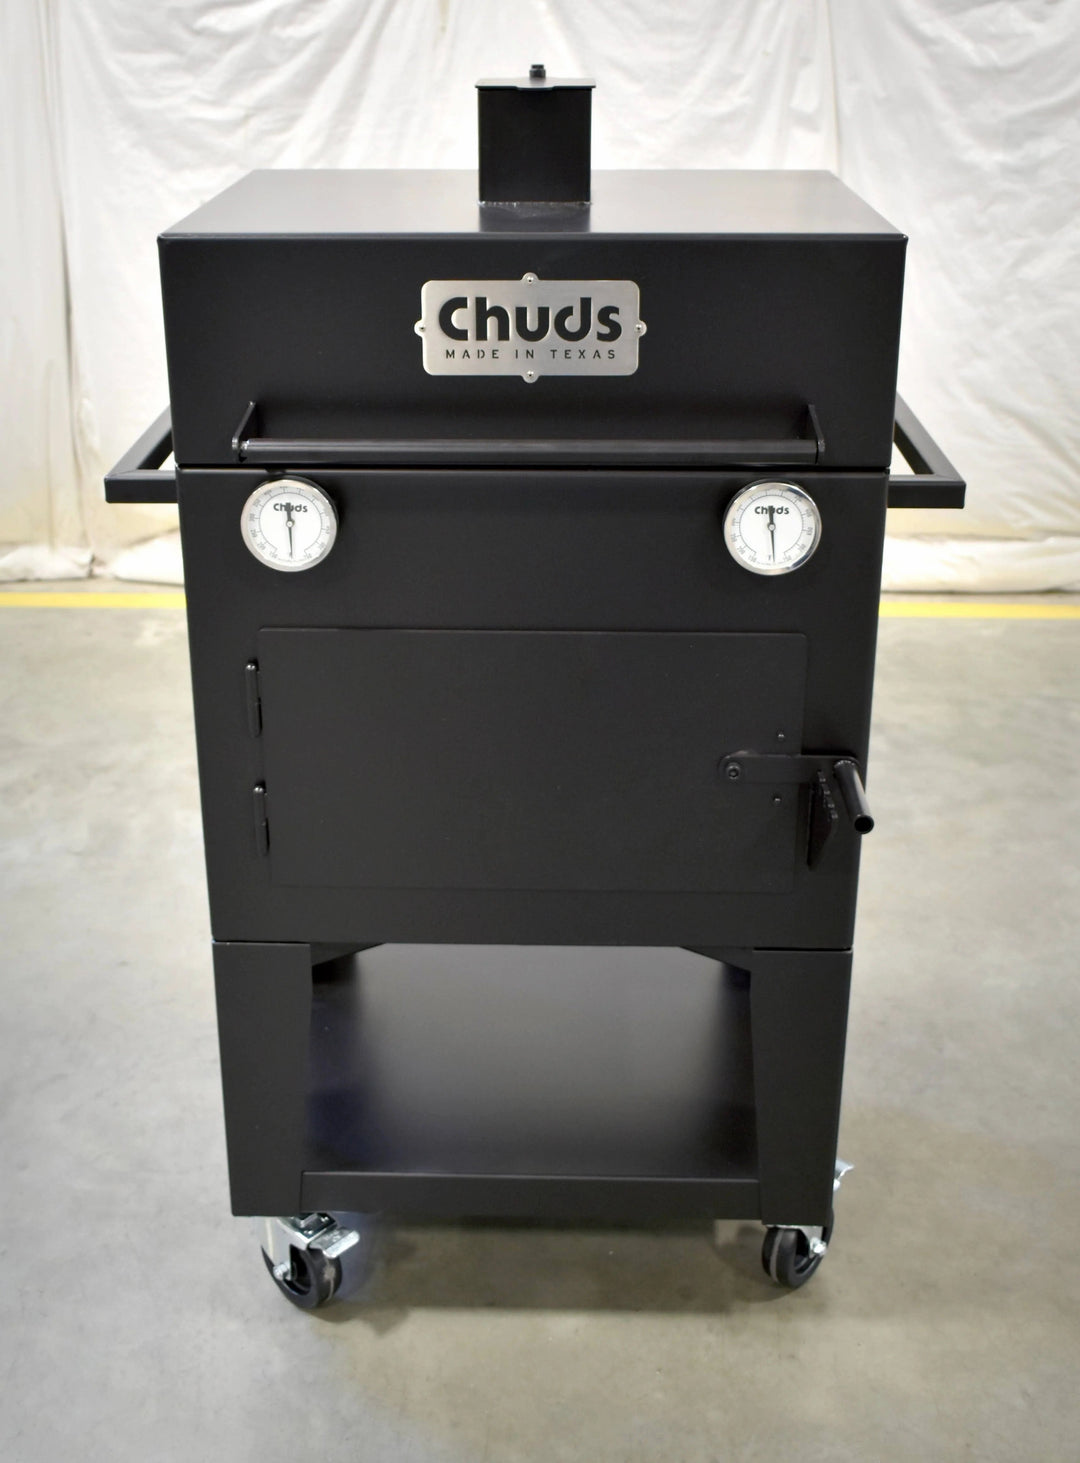 The Chudbox - Direct Heat Cooker